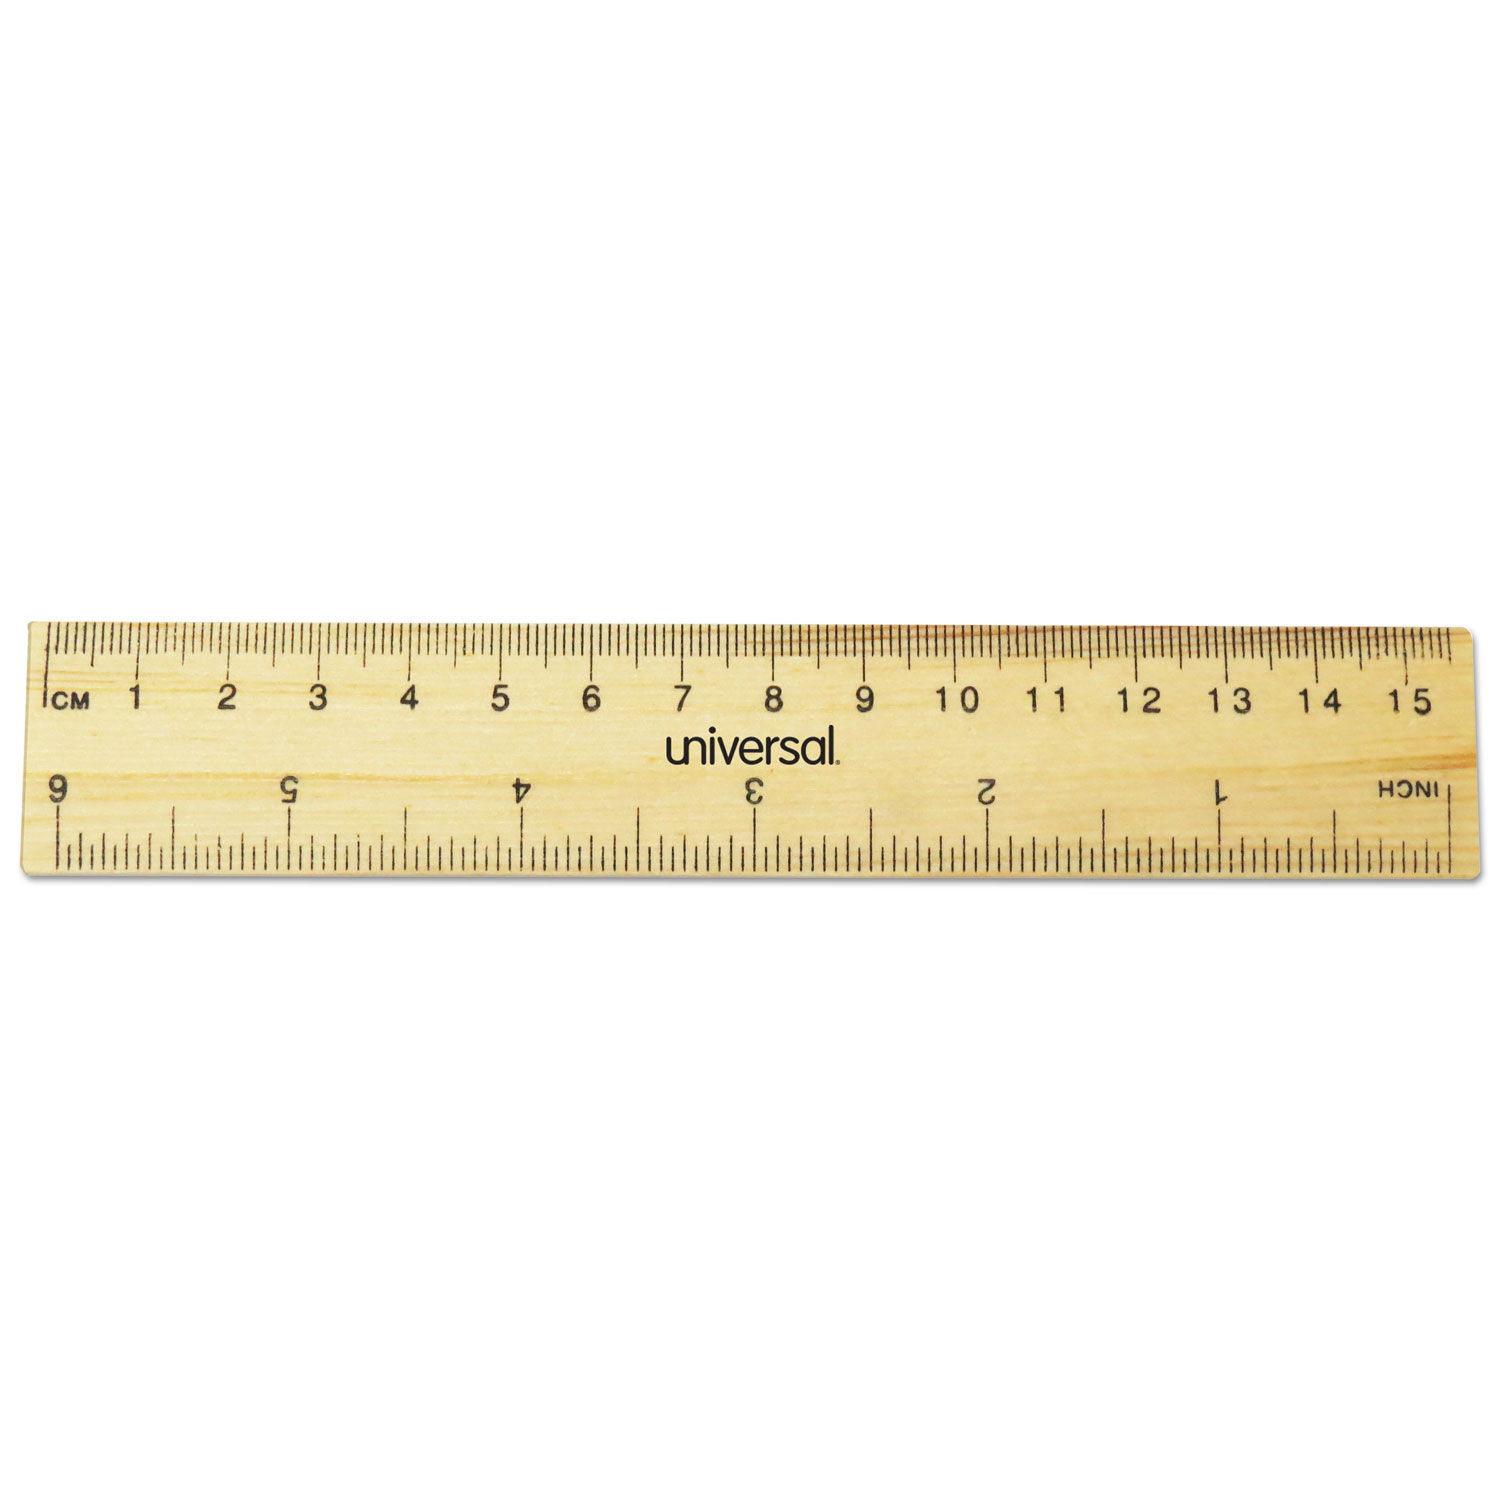 12 inch Wooden Ruler